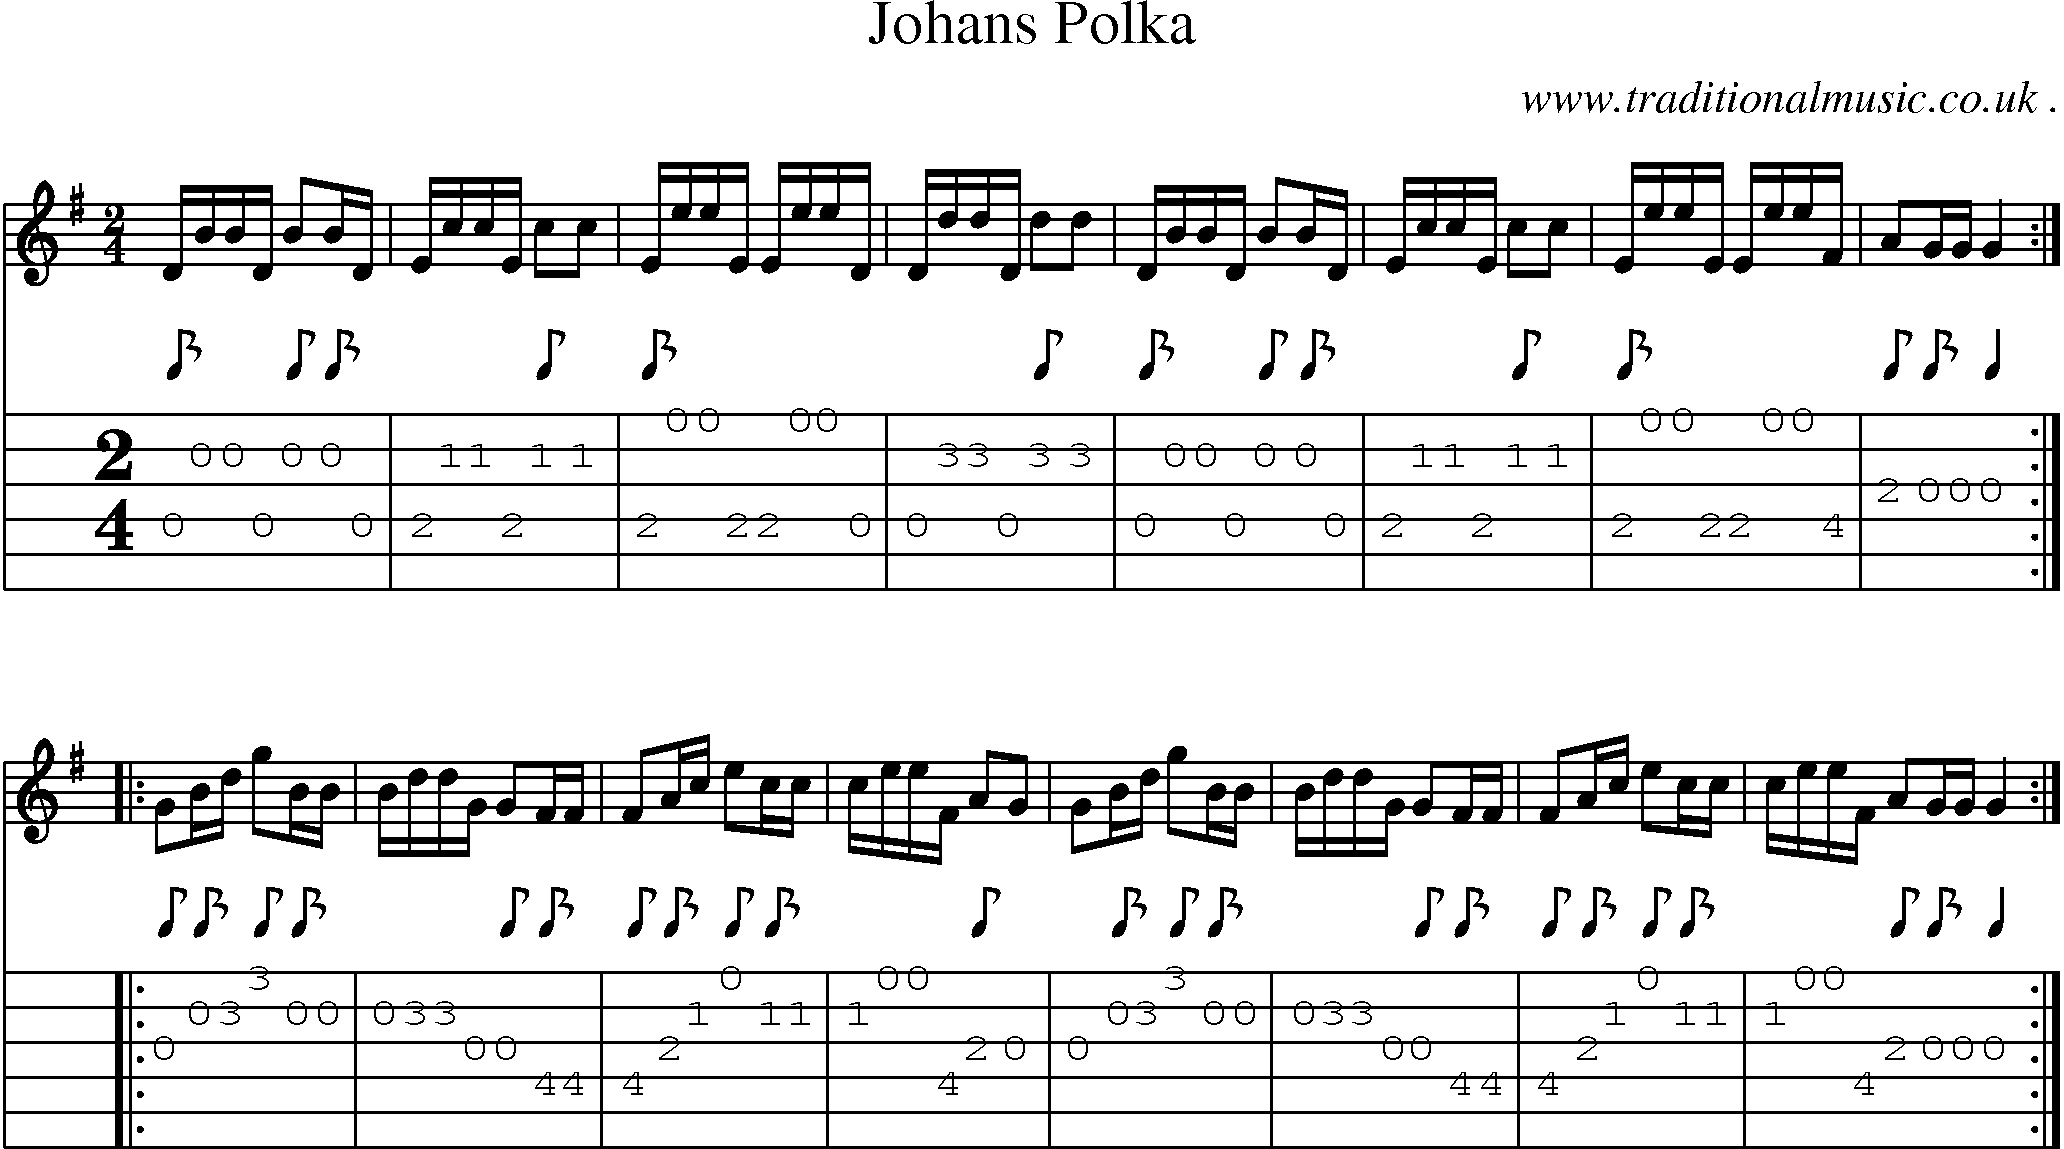 Sheet-Music and Guitar Tabs for Johans Polka